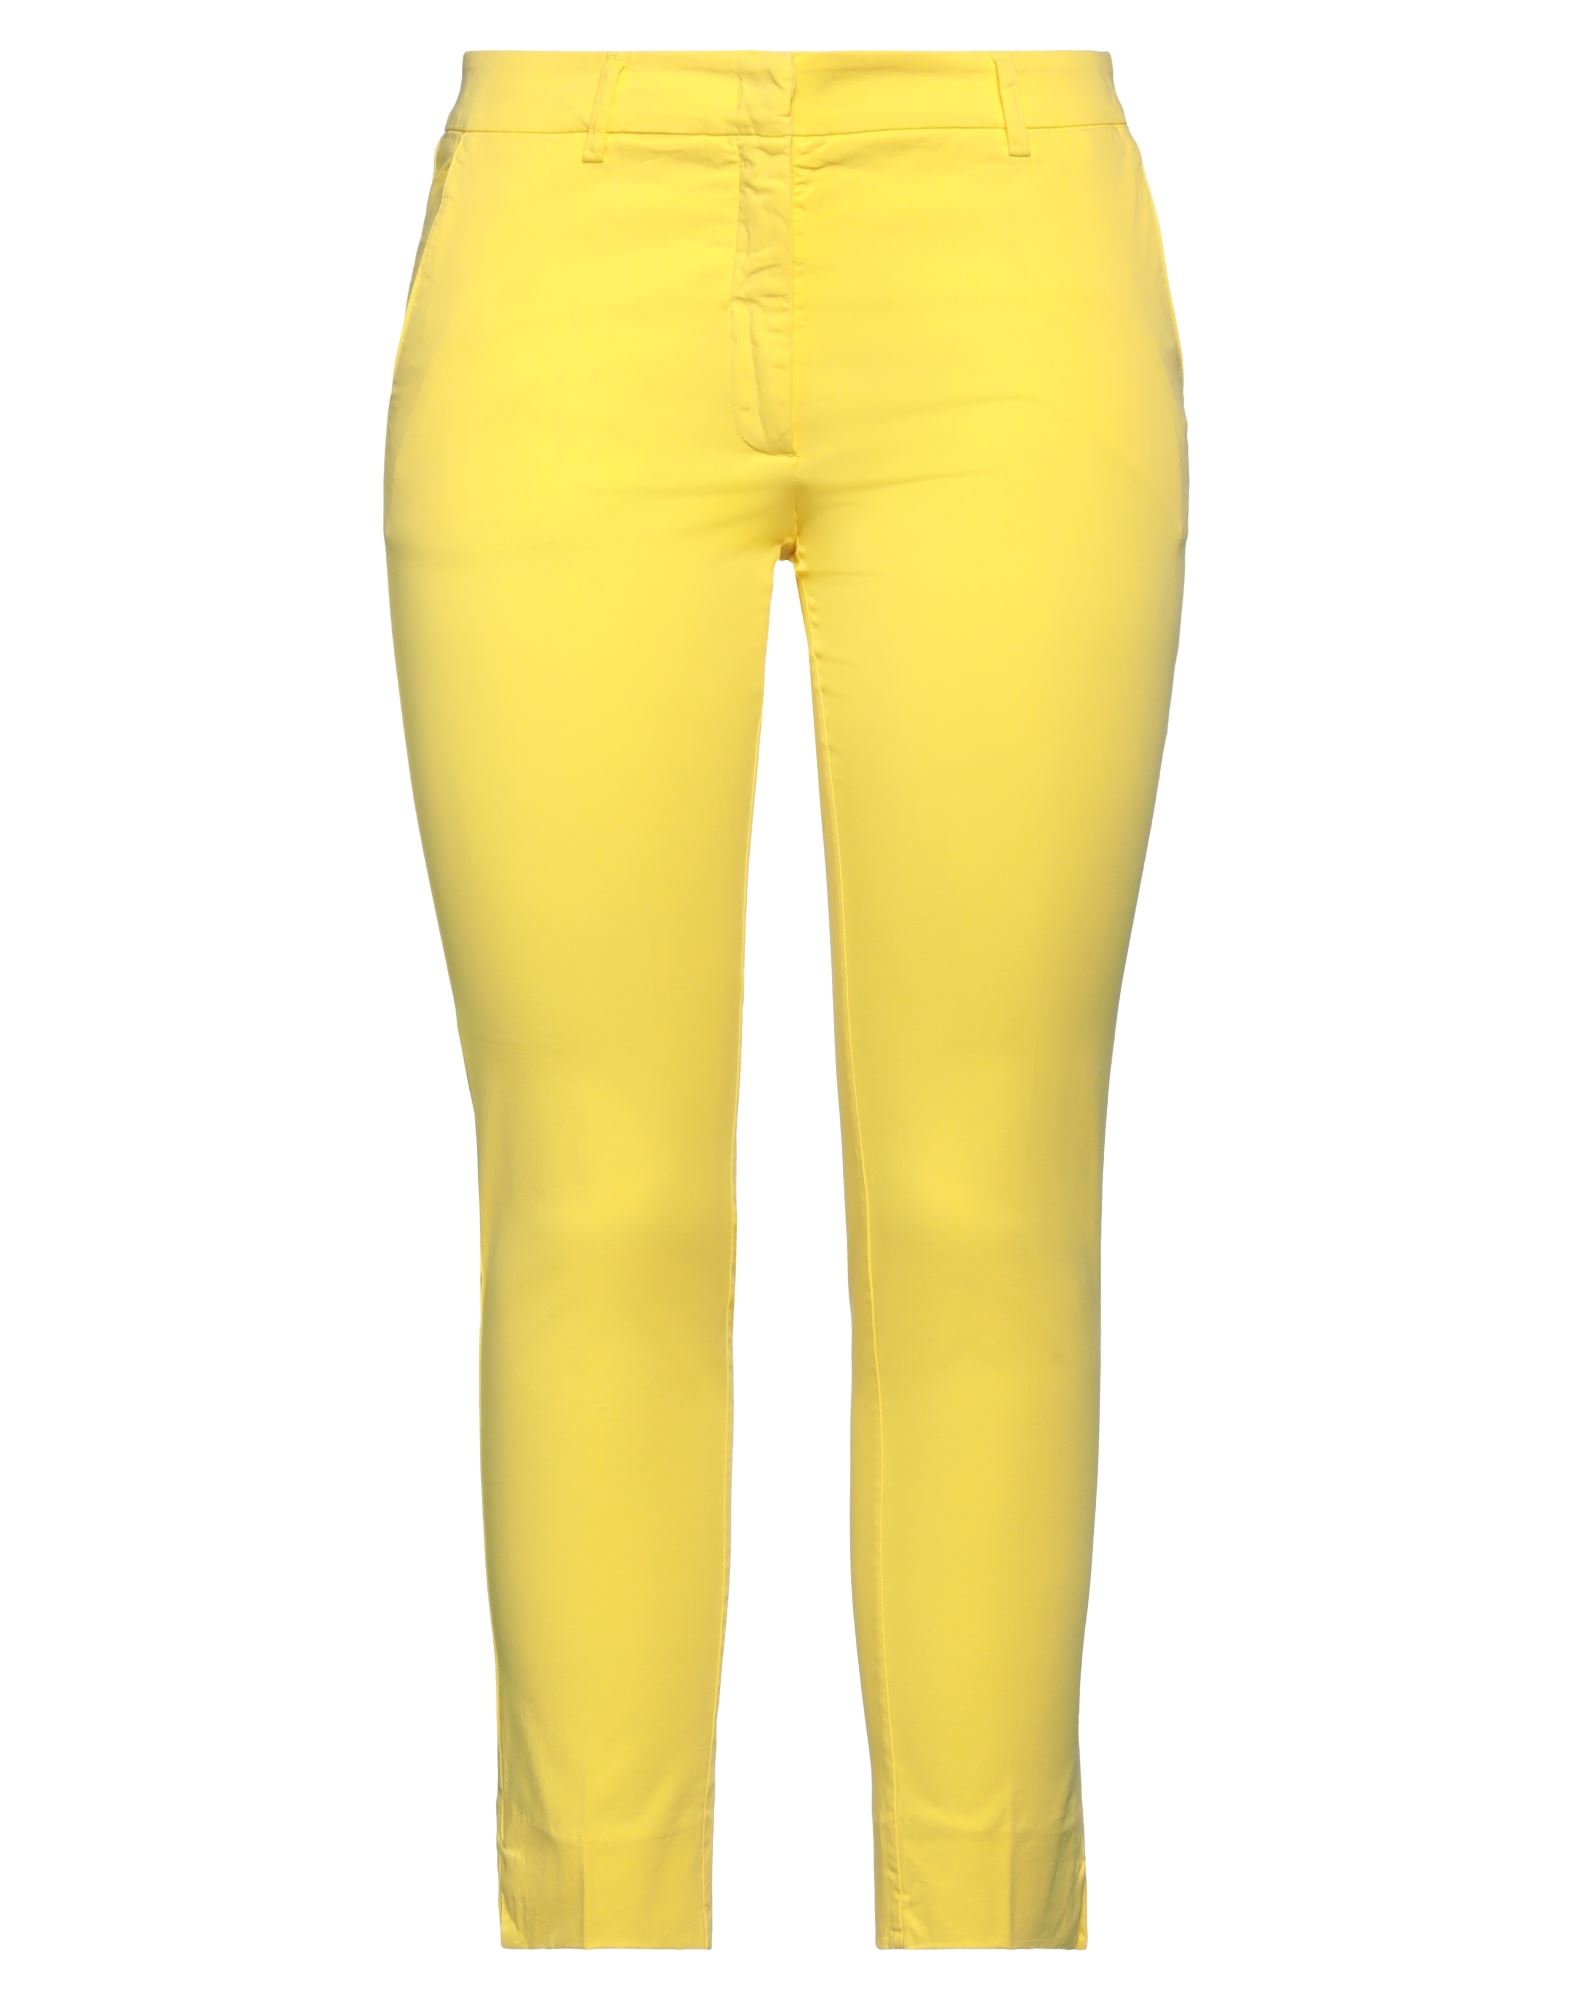 Rossopuro Pants In Yellow